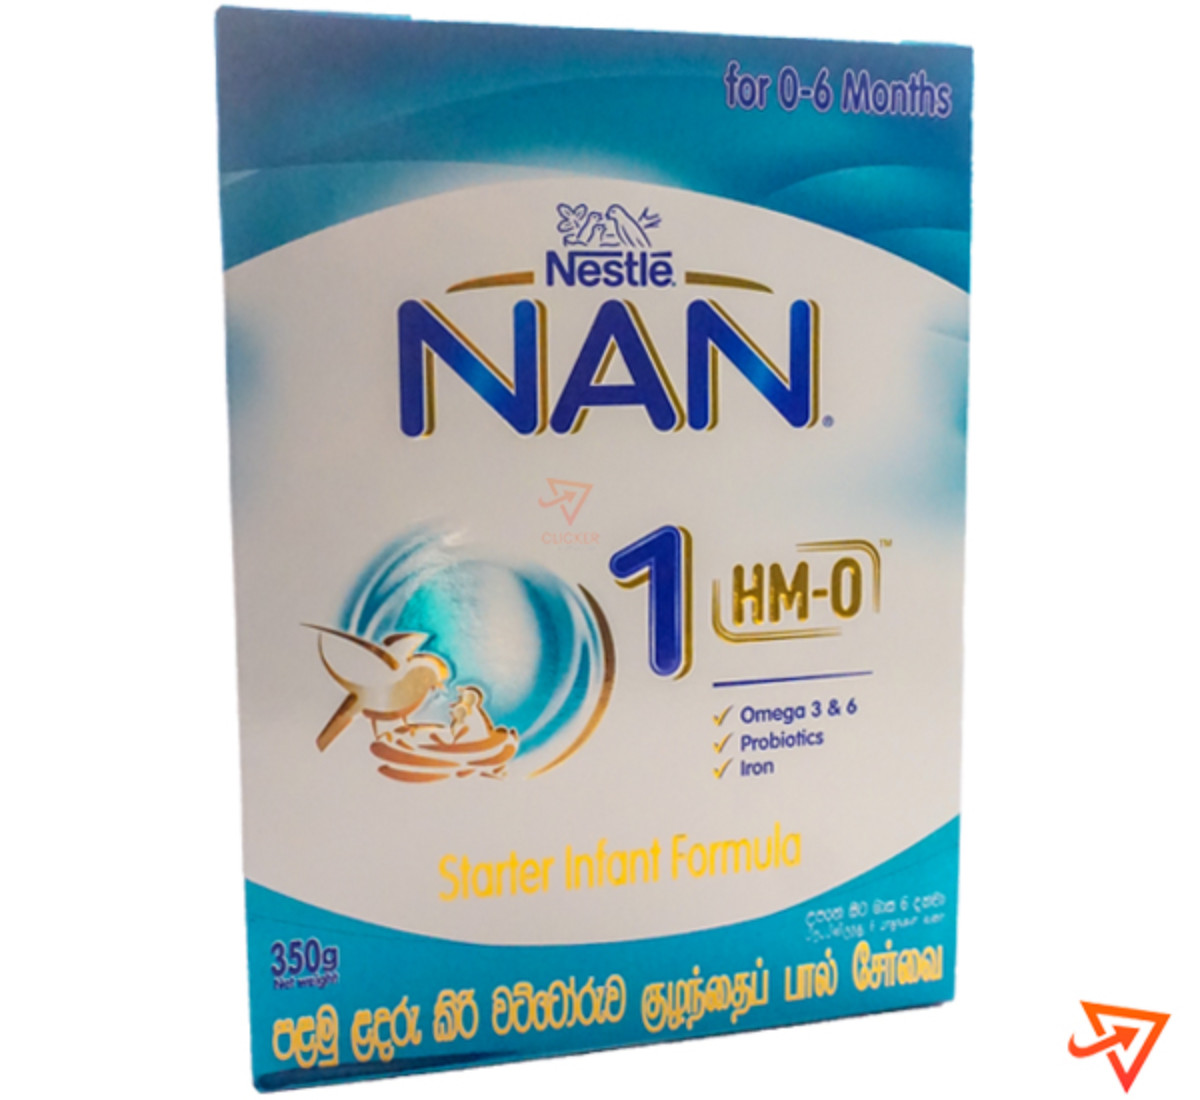 Clicker product 350g NESTLE Nan- 01 starter infant Formula 1046